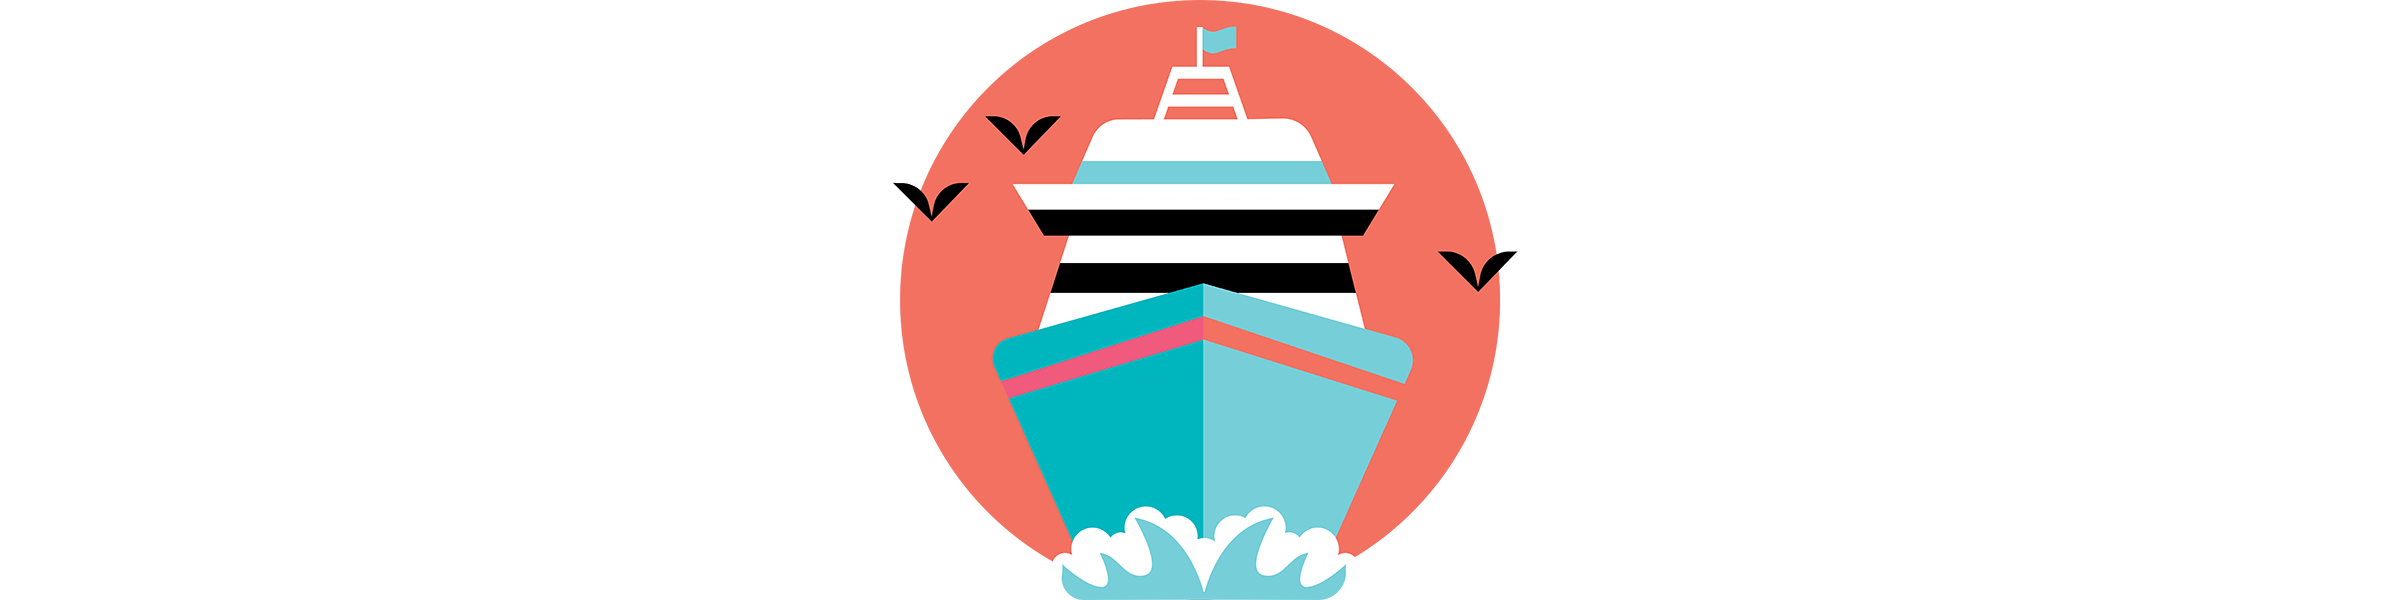 spot illustration of a cruise ship